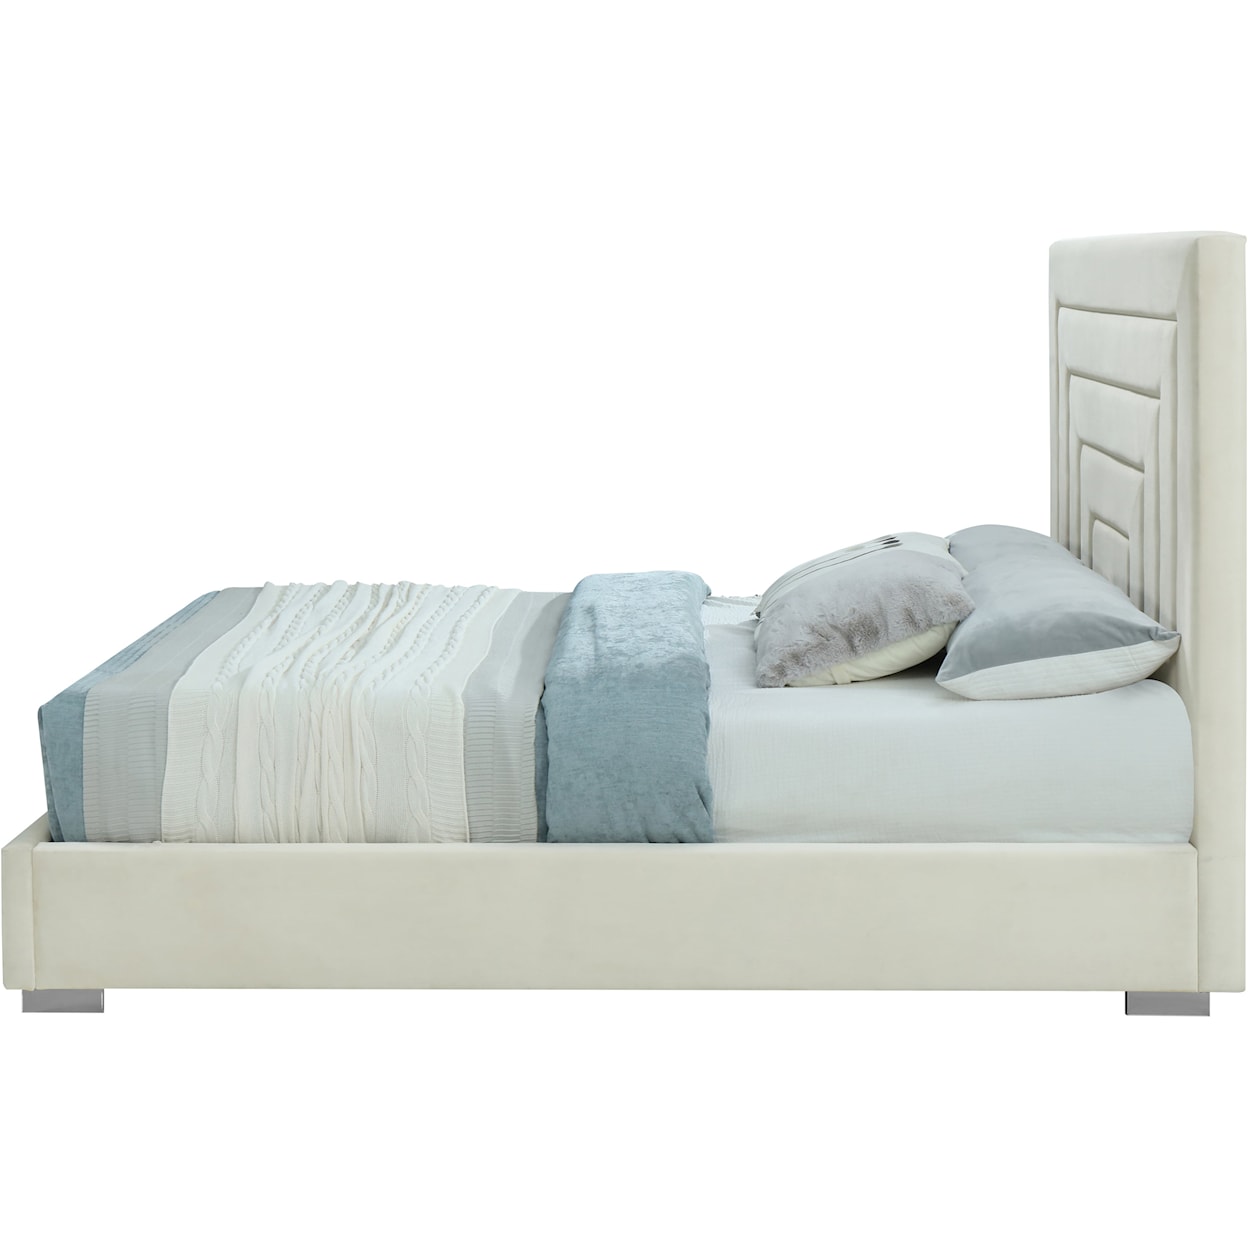 Meridian Furniture Nora Full Bed